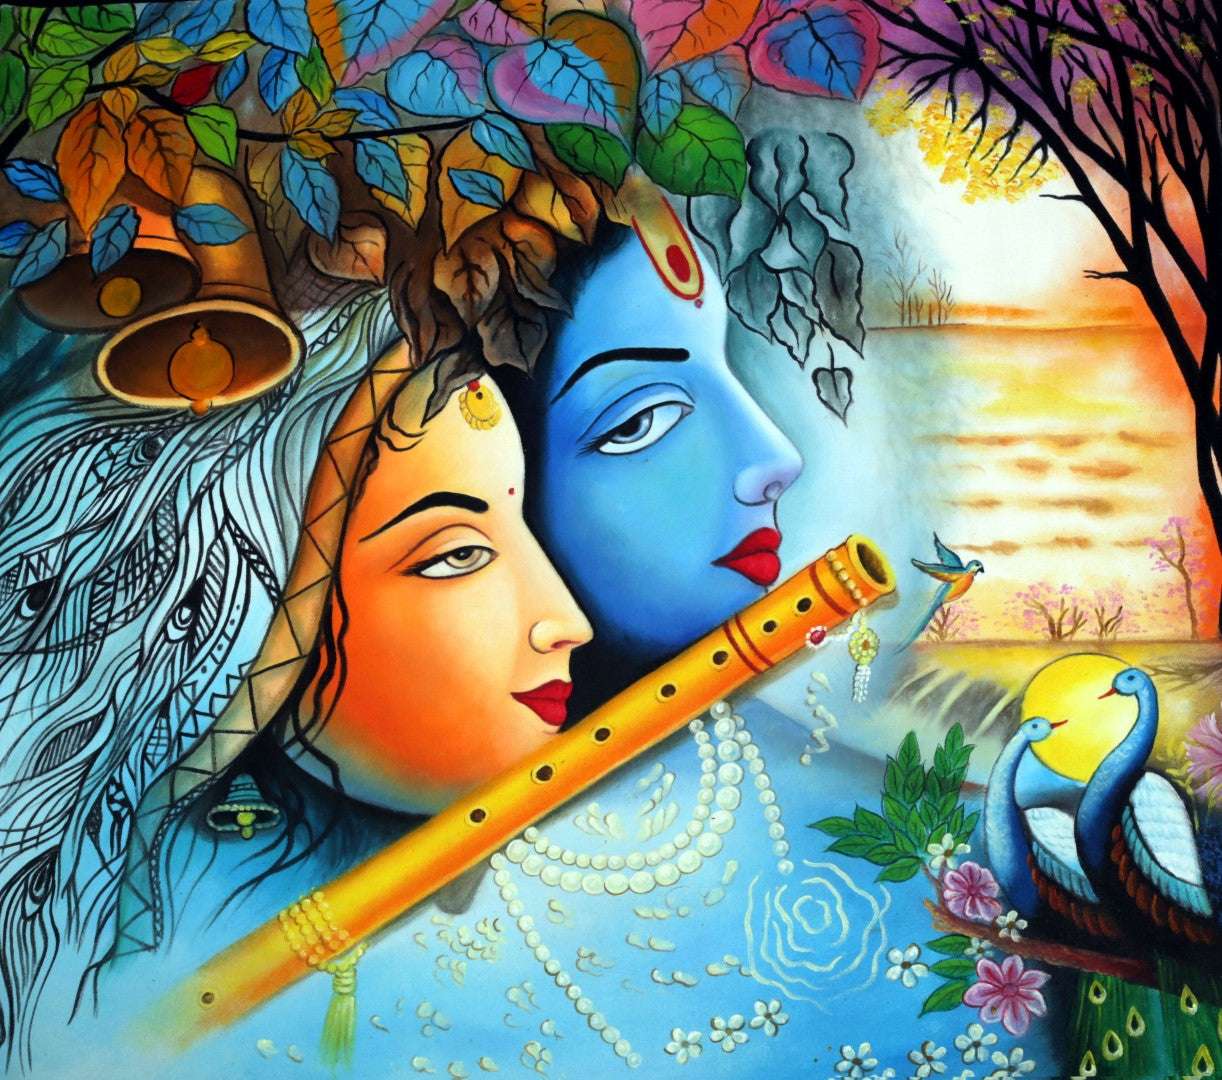 Radha Krishna Handmade Acrylic Painting Writings On The Wall Oil Painting